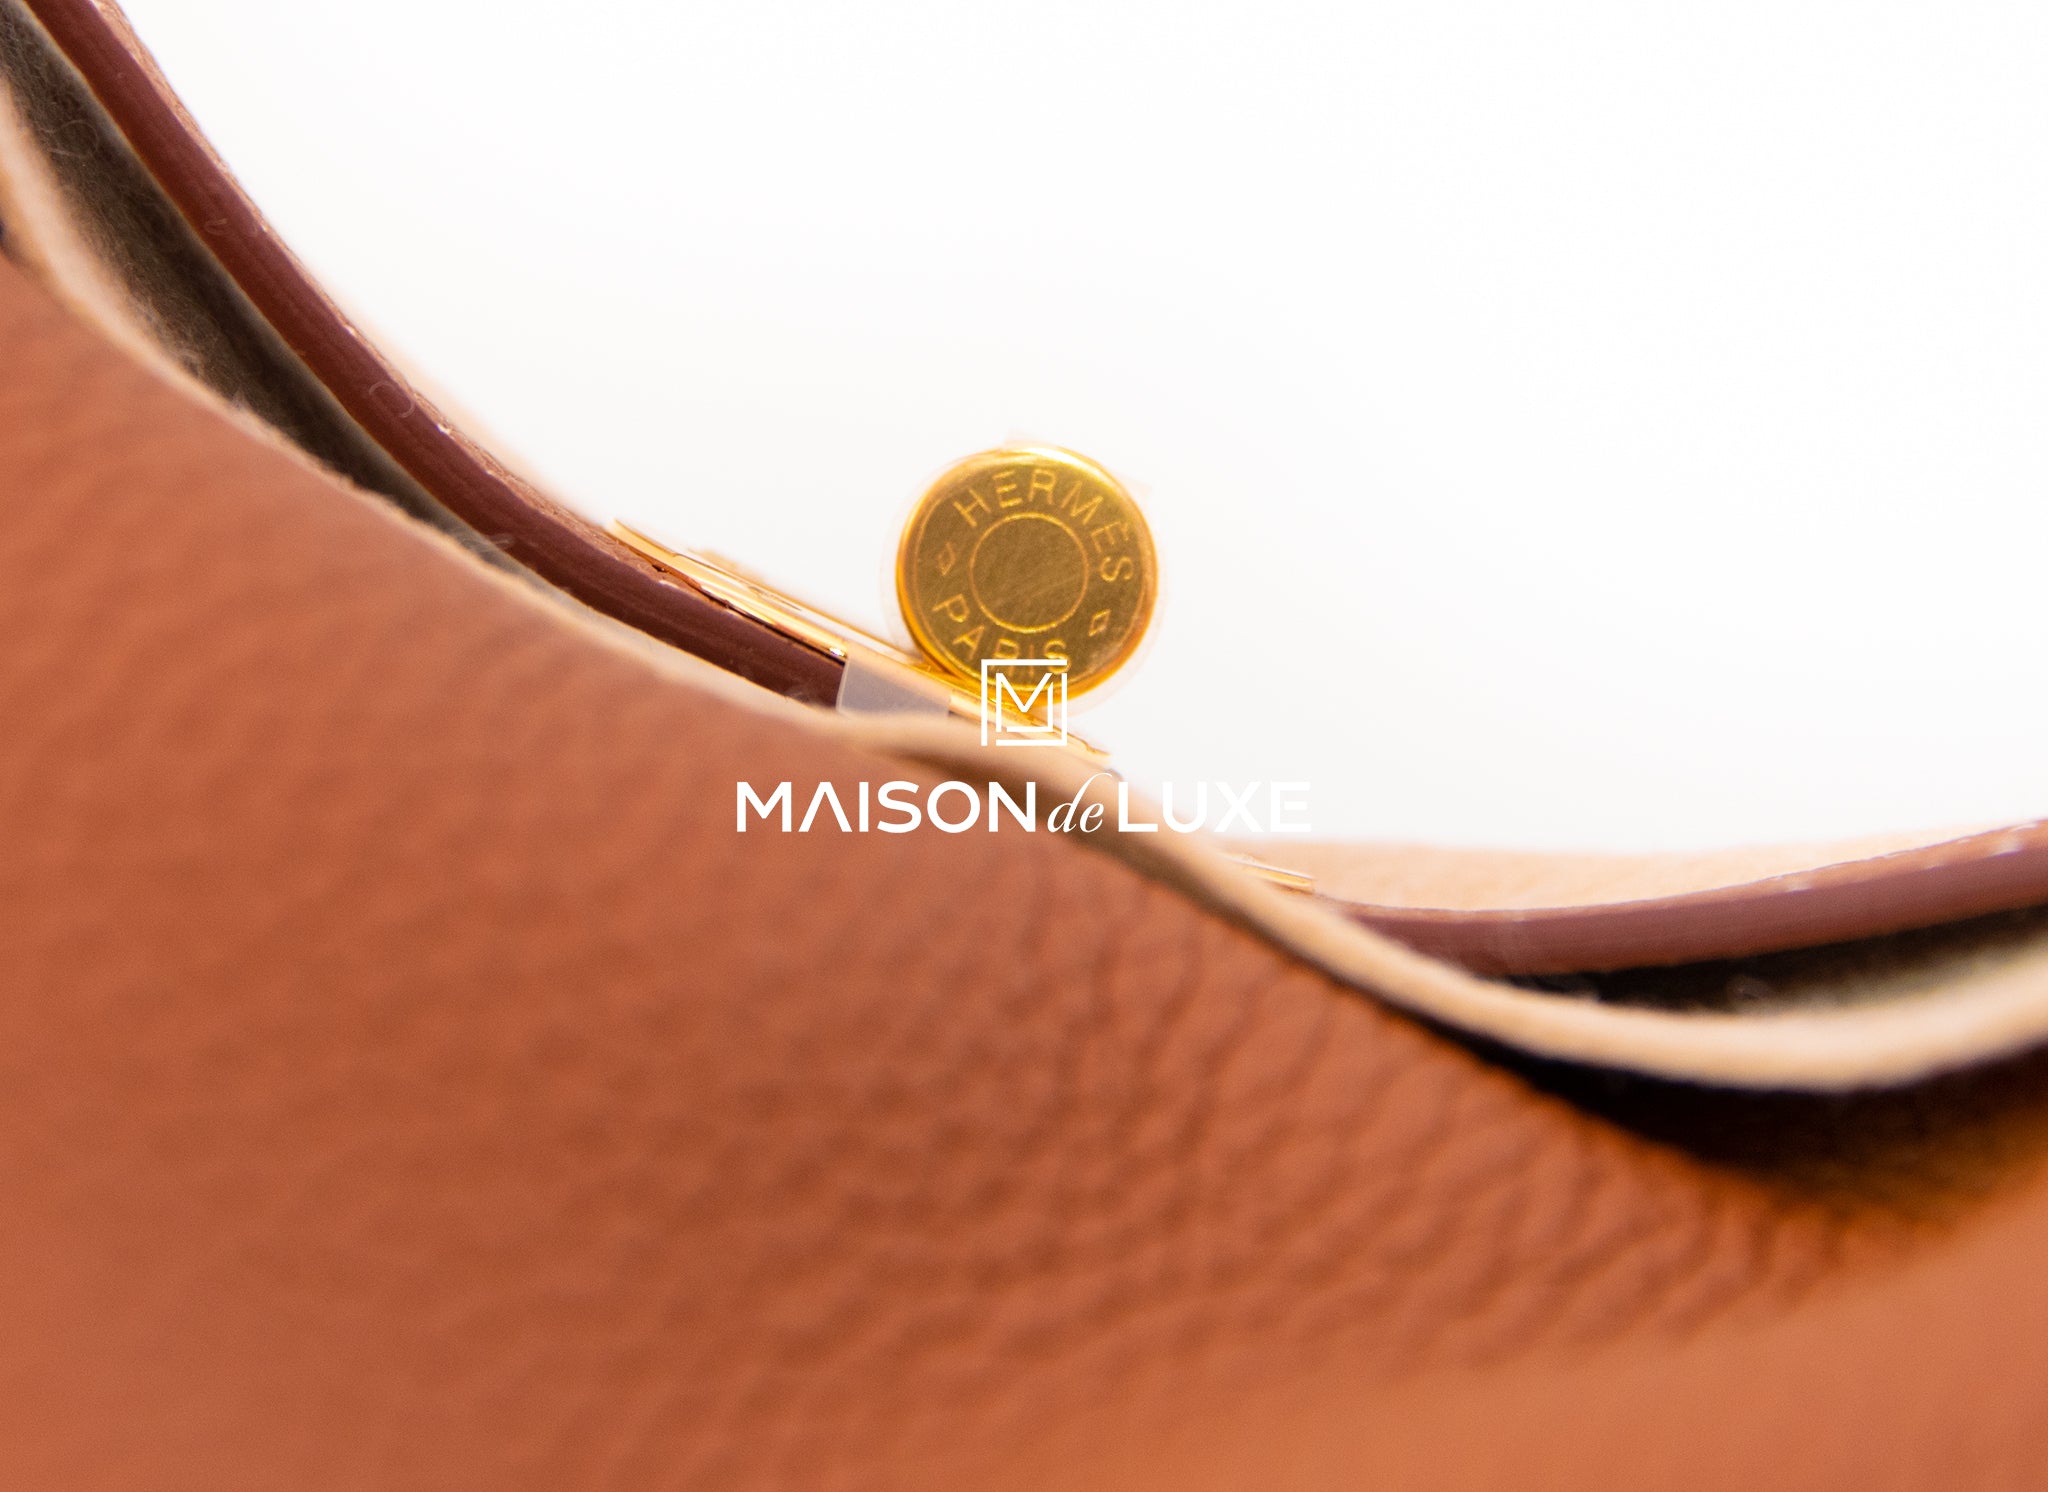 Lindy leather handbag Hermès Brown in Leather - 36517487